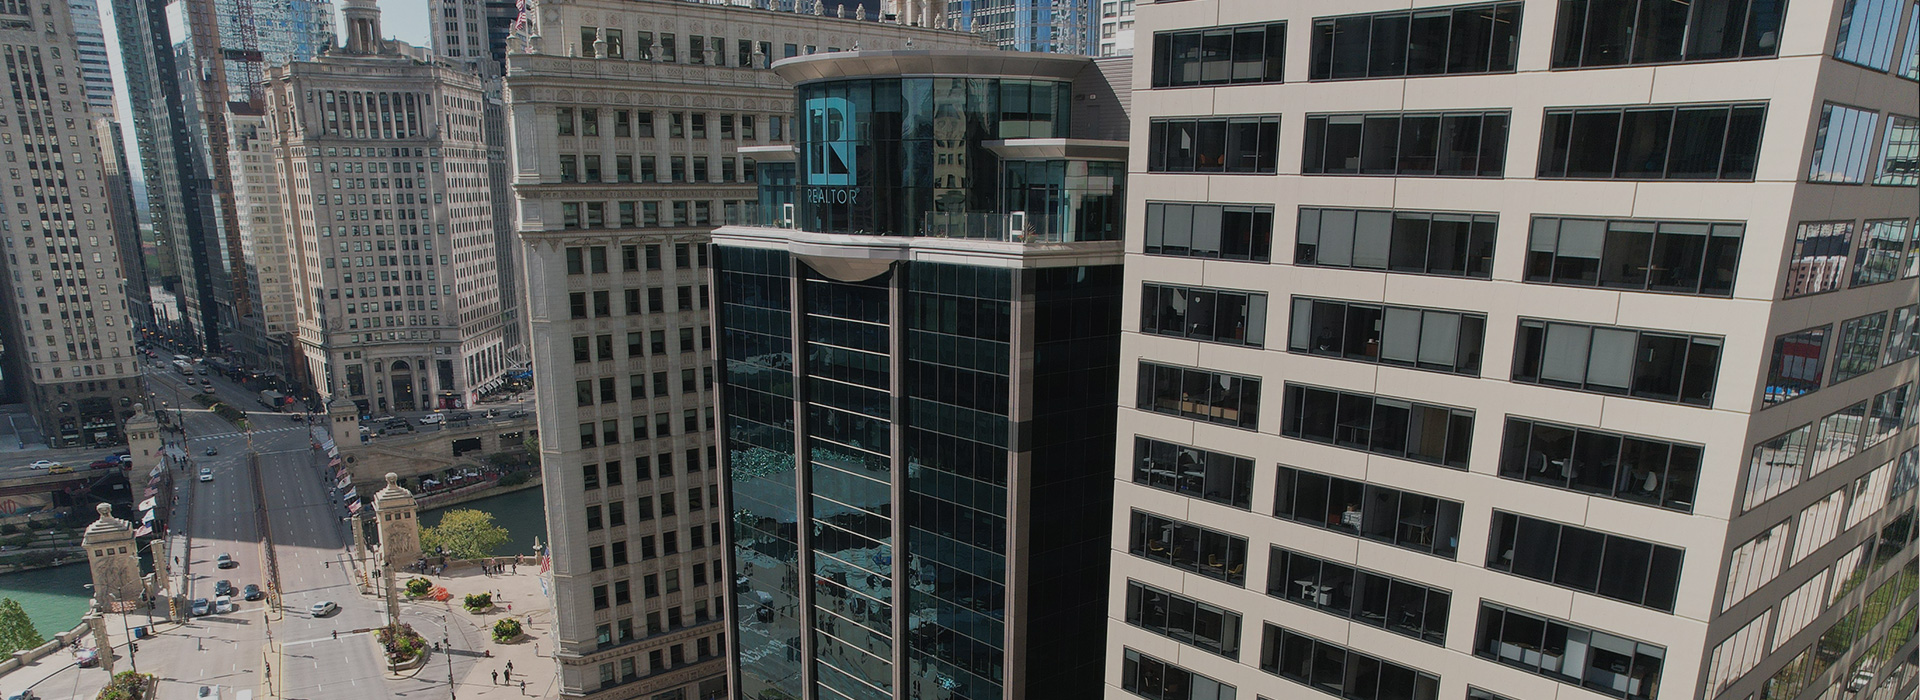 The Realtor building on Chicago's Michigan Avenue